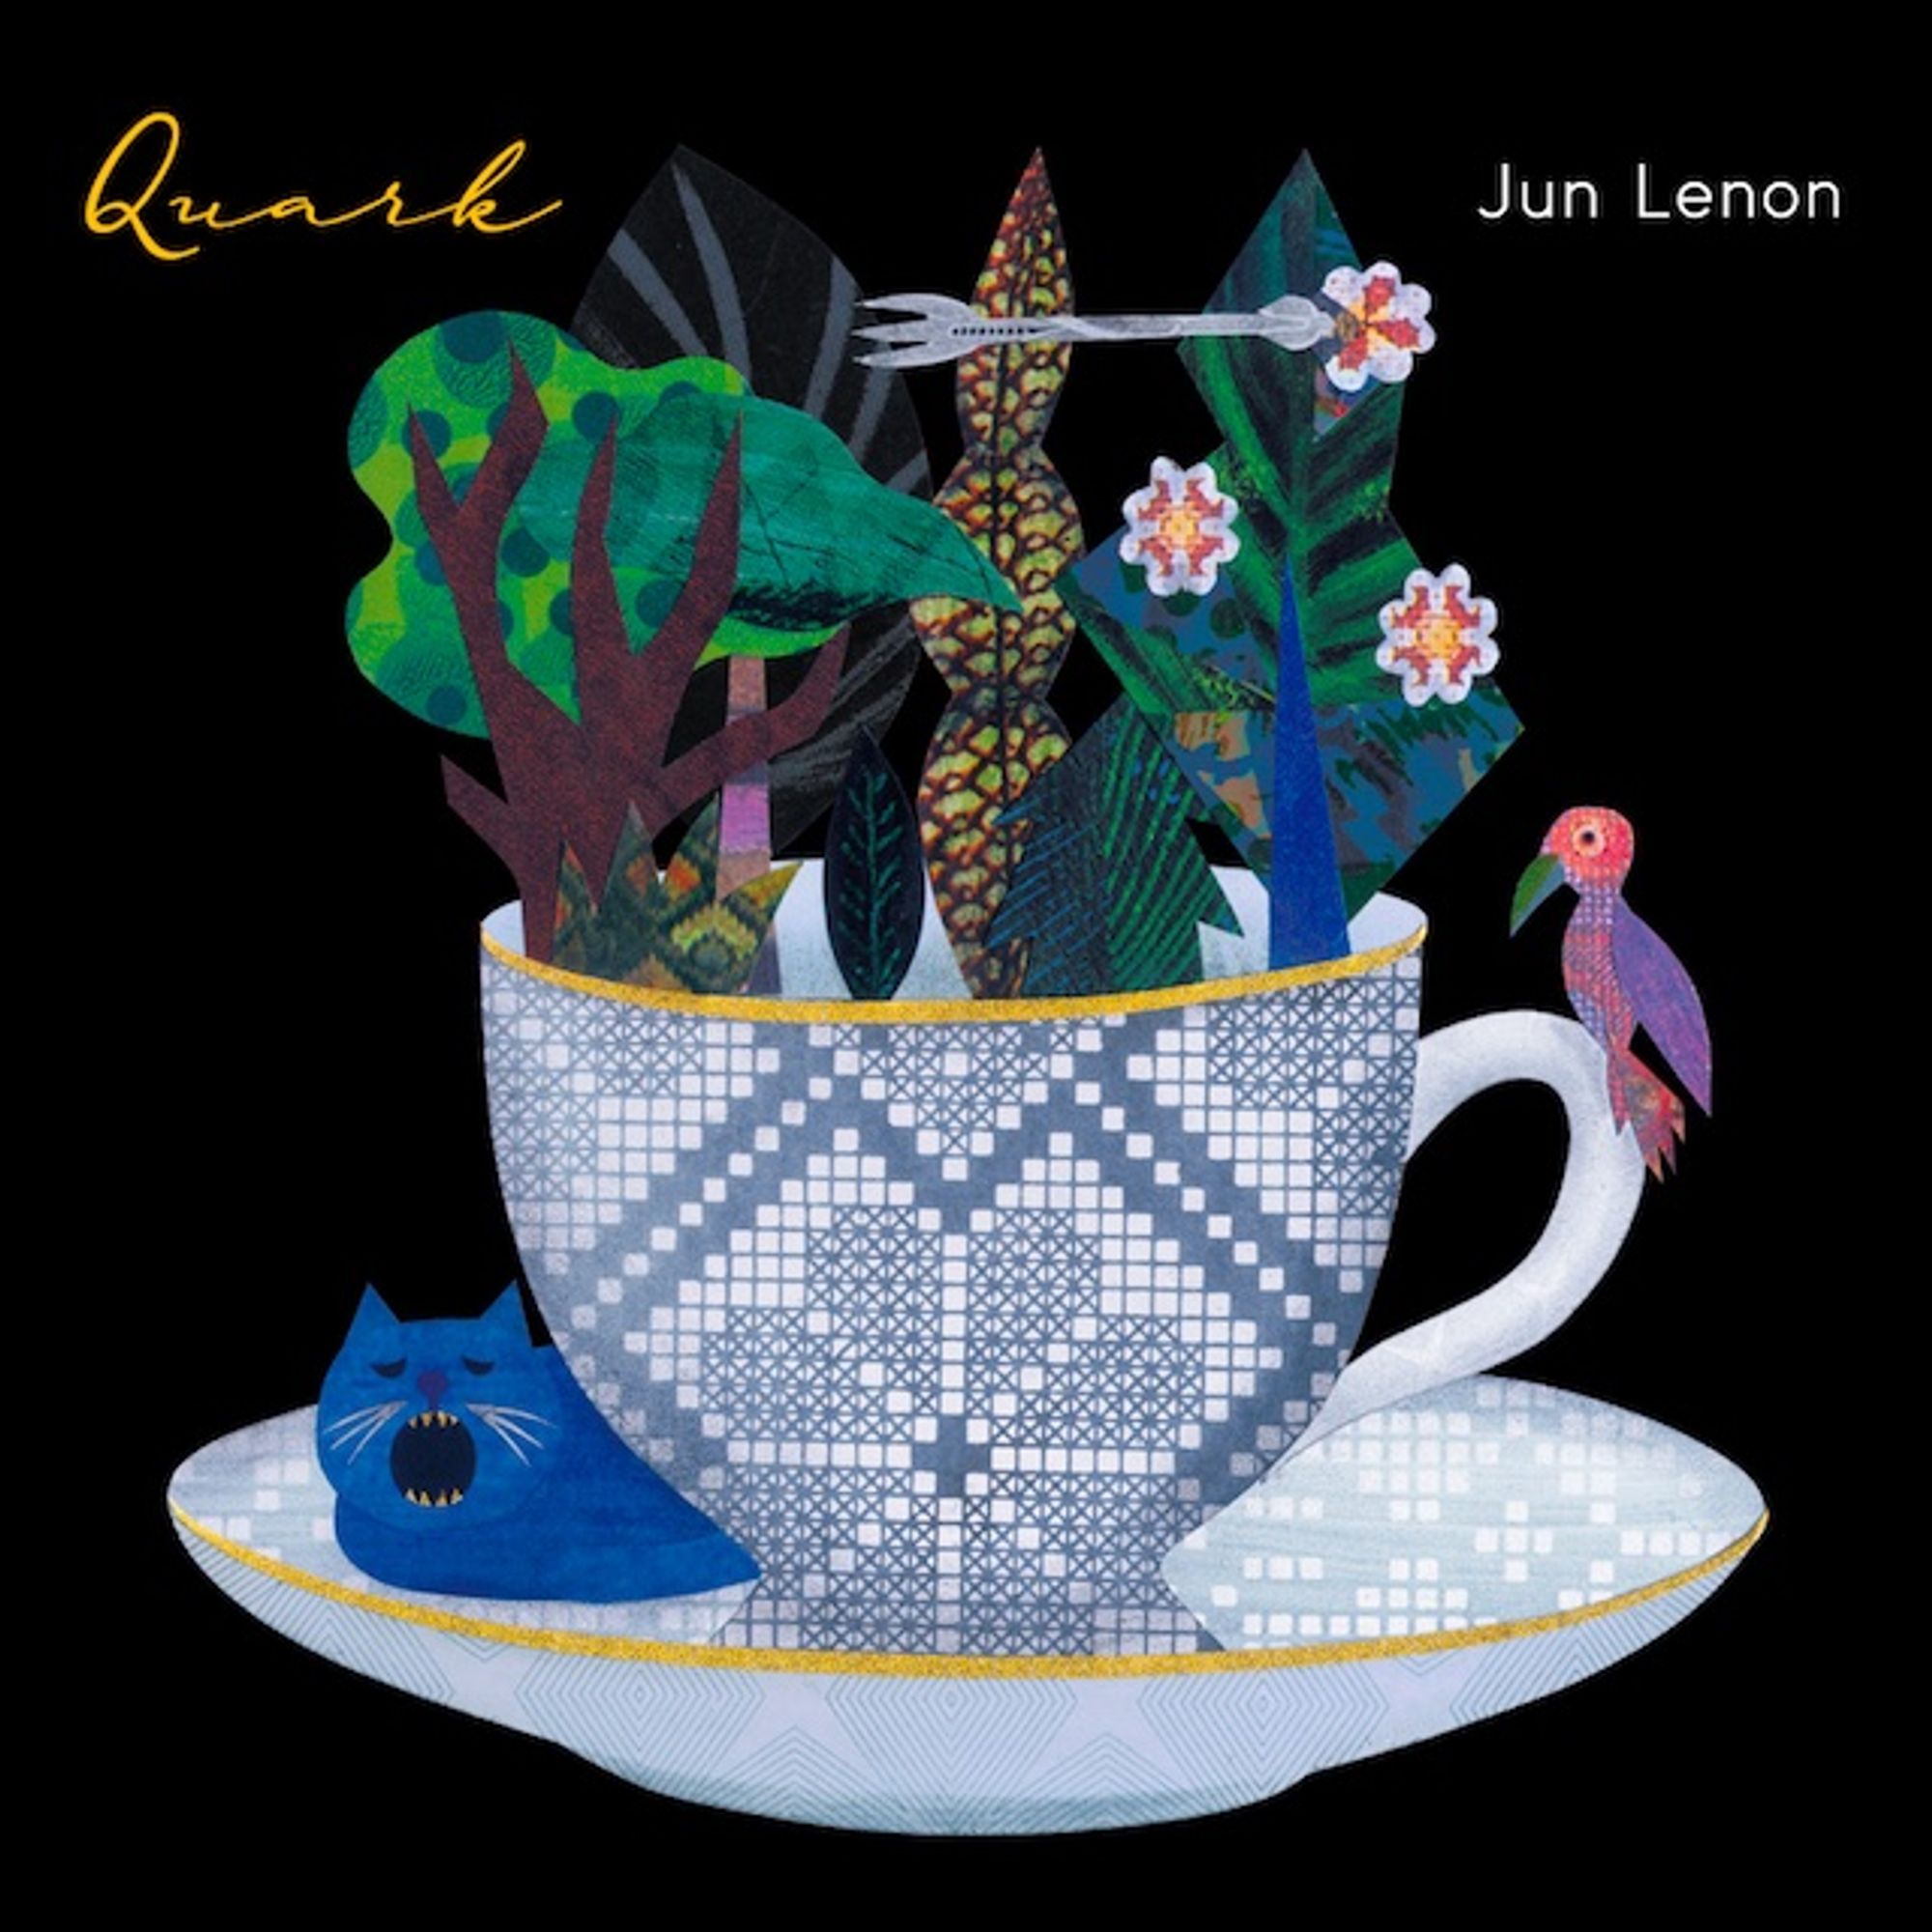 Album “Quark” by Jun Lenon